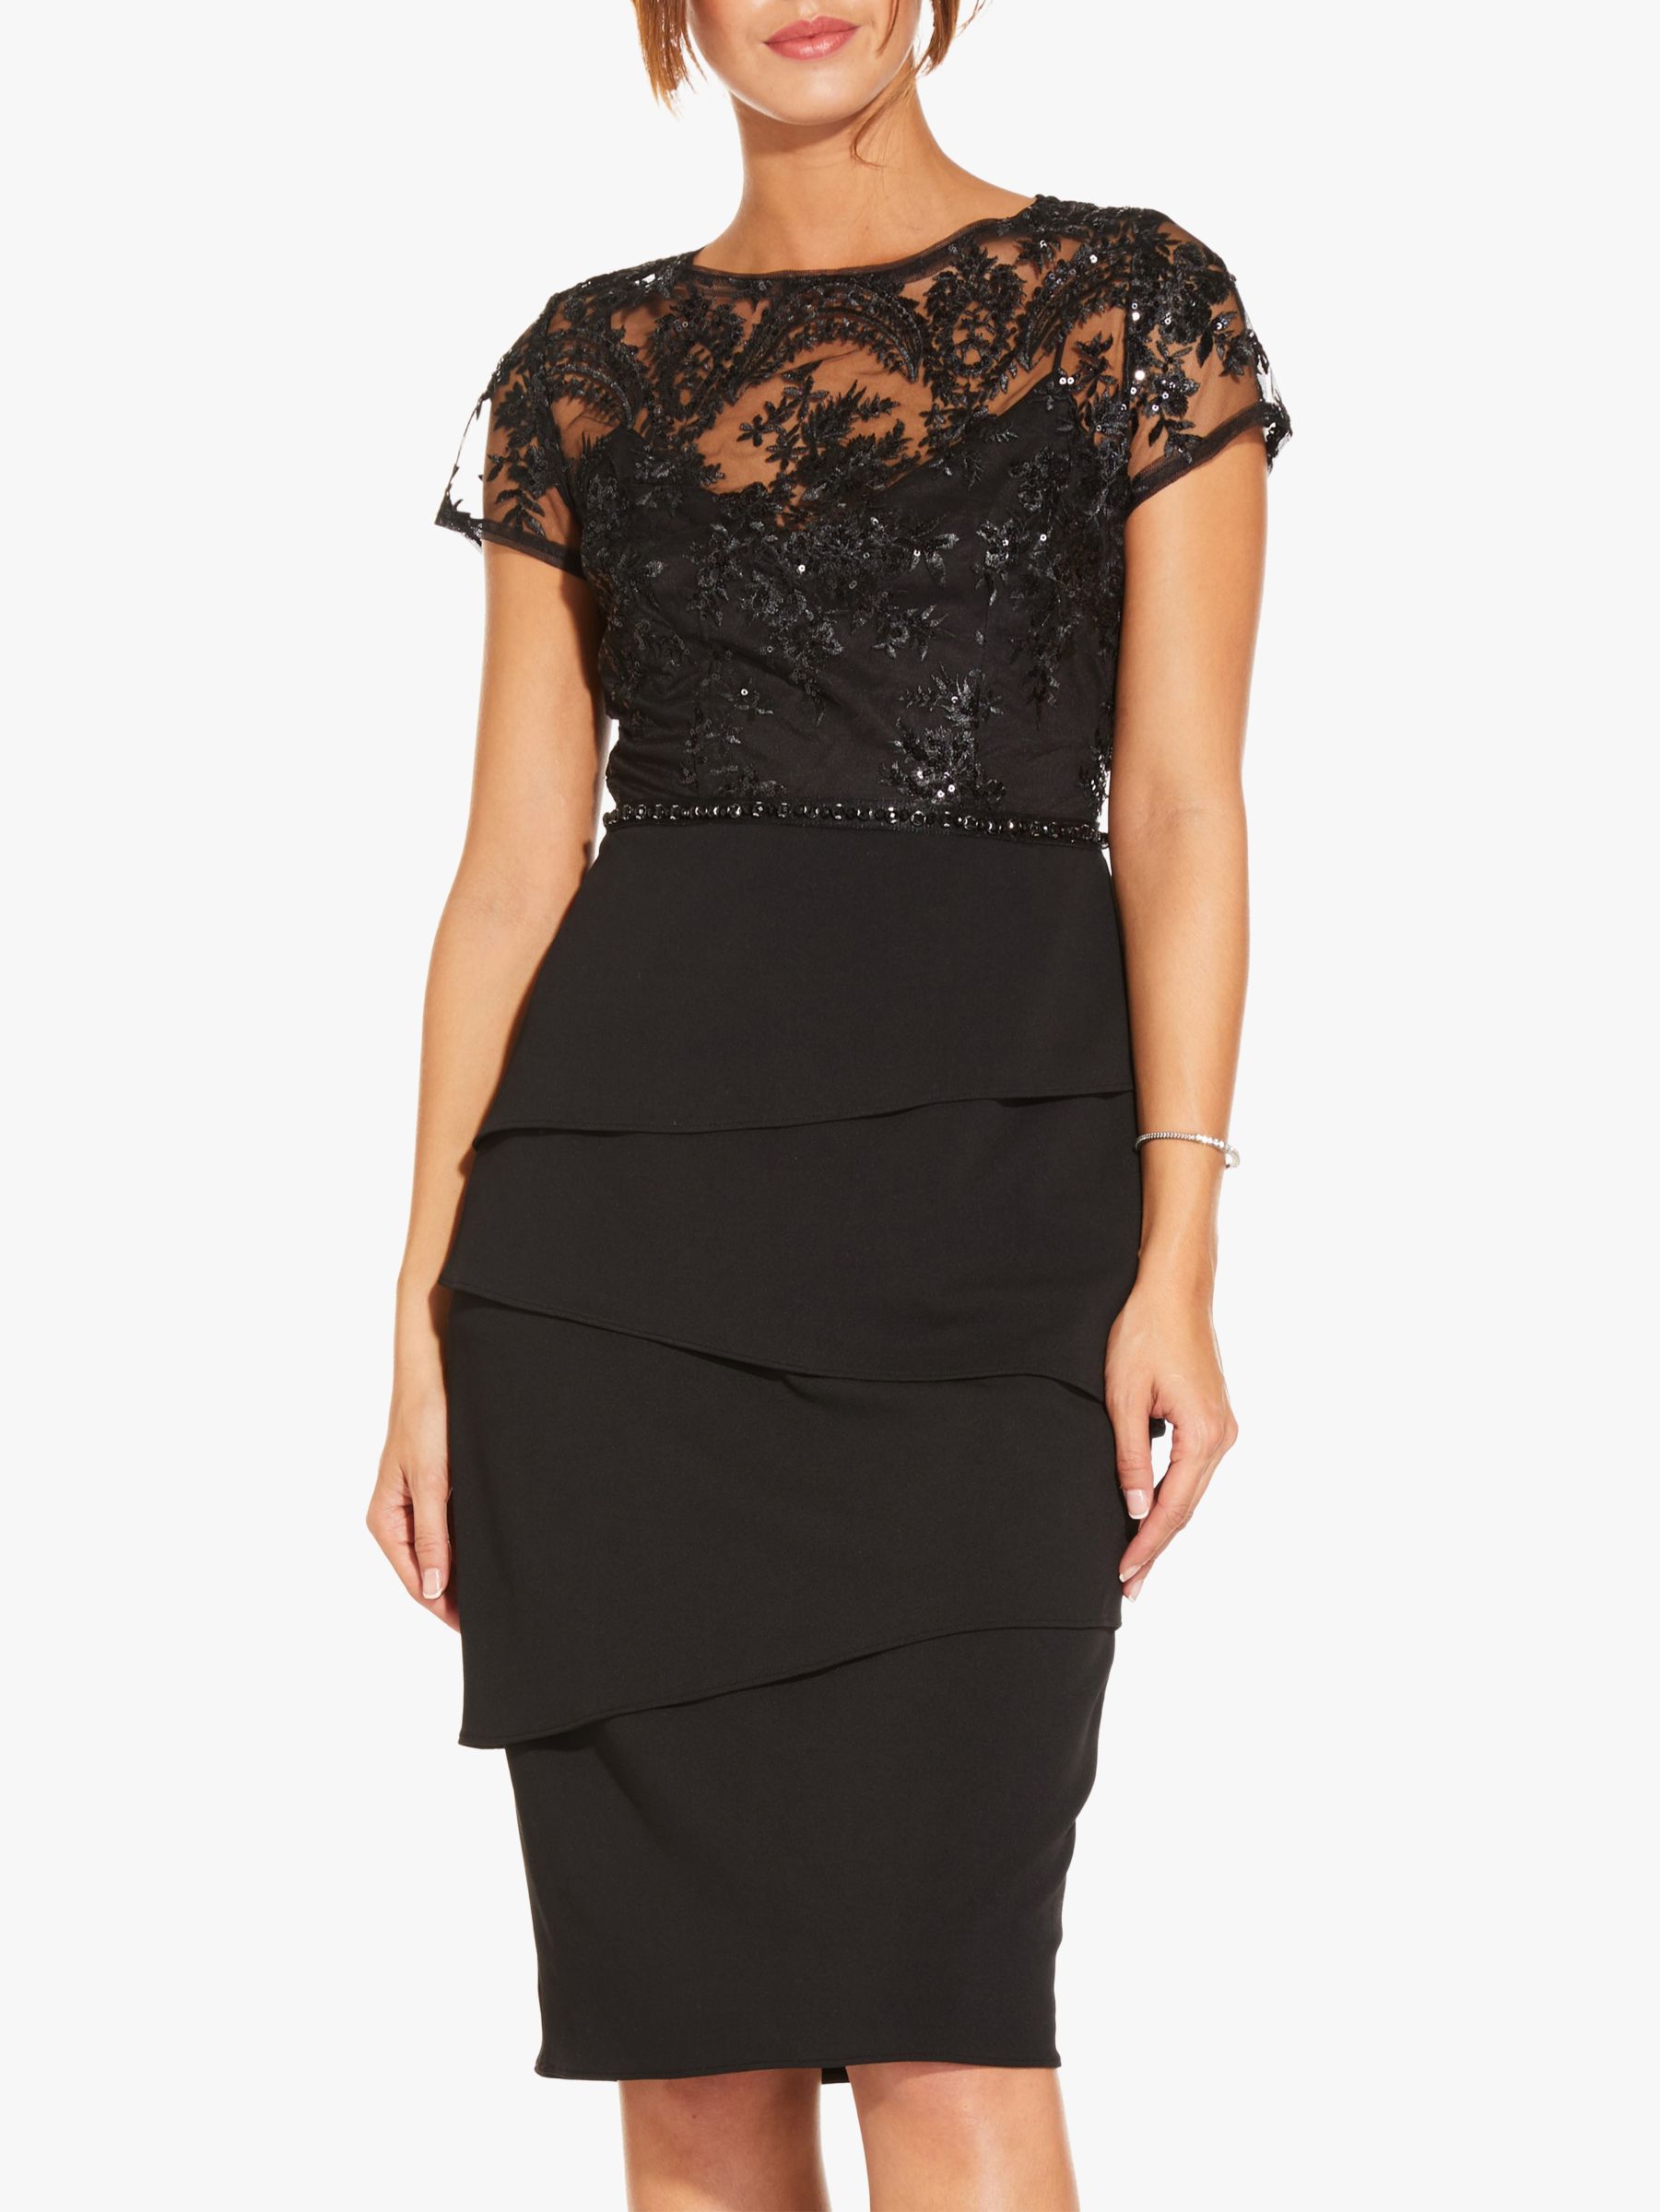 Adrianna Papell Short Sequin Layered Dress, Black